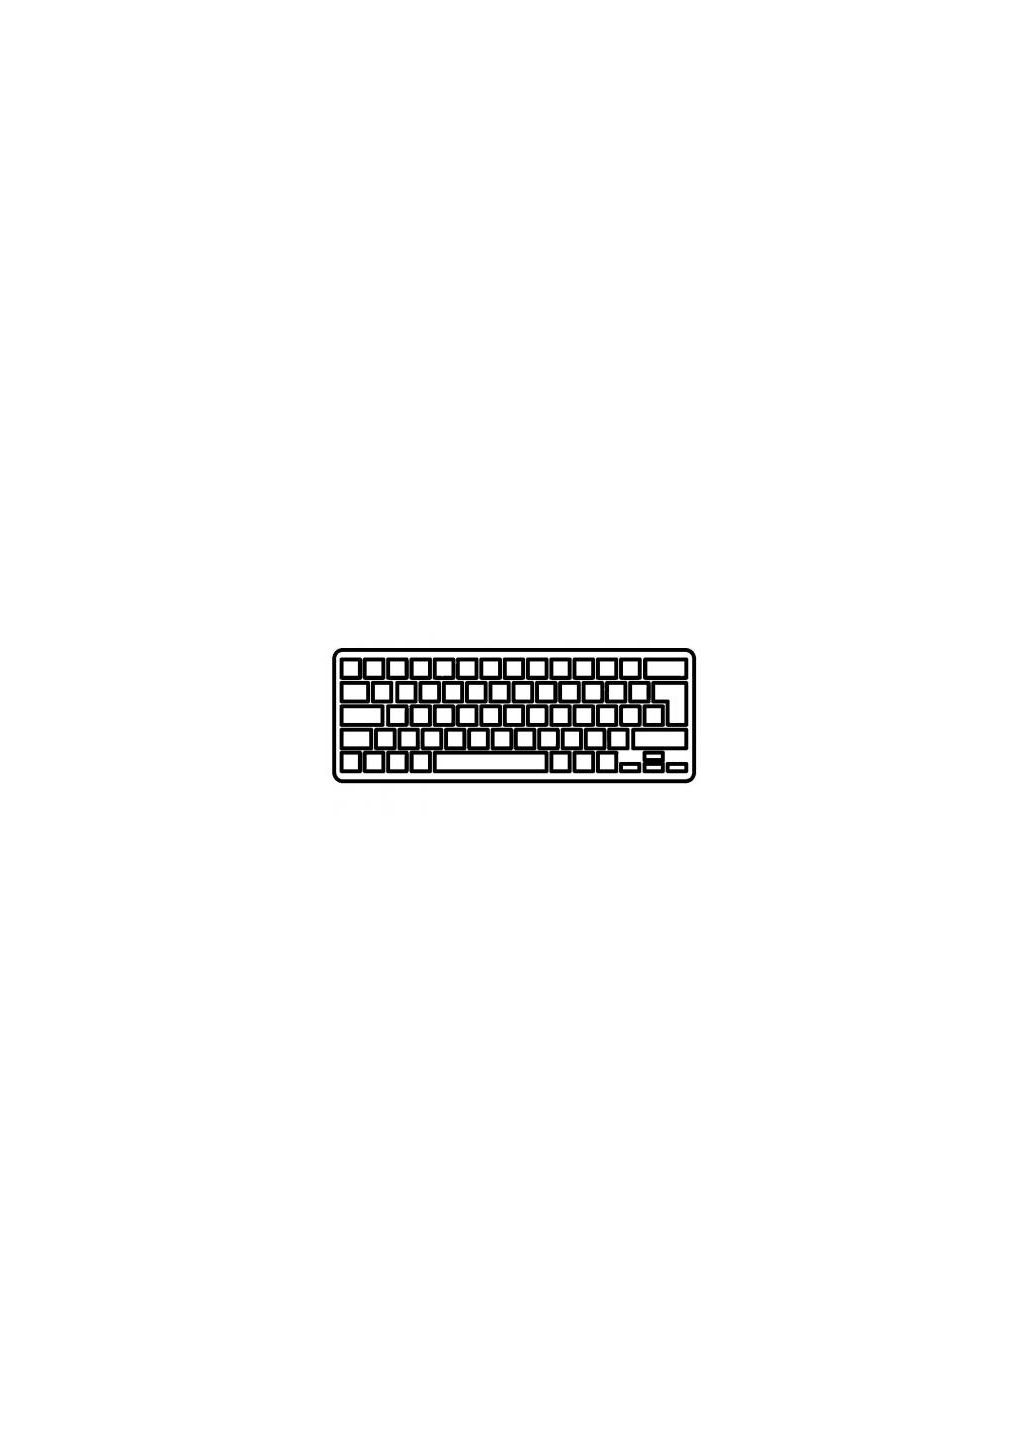 Клавиатура ноутбука XPS 13 9343/9350/Inspiron 137359 черная без рамки подсвет.U (A43892) Dell xps 13 9343/9350/inspiron 13-7359 черная без рамки (276707129)